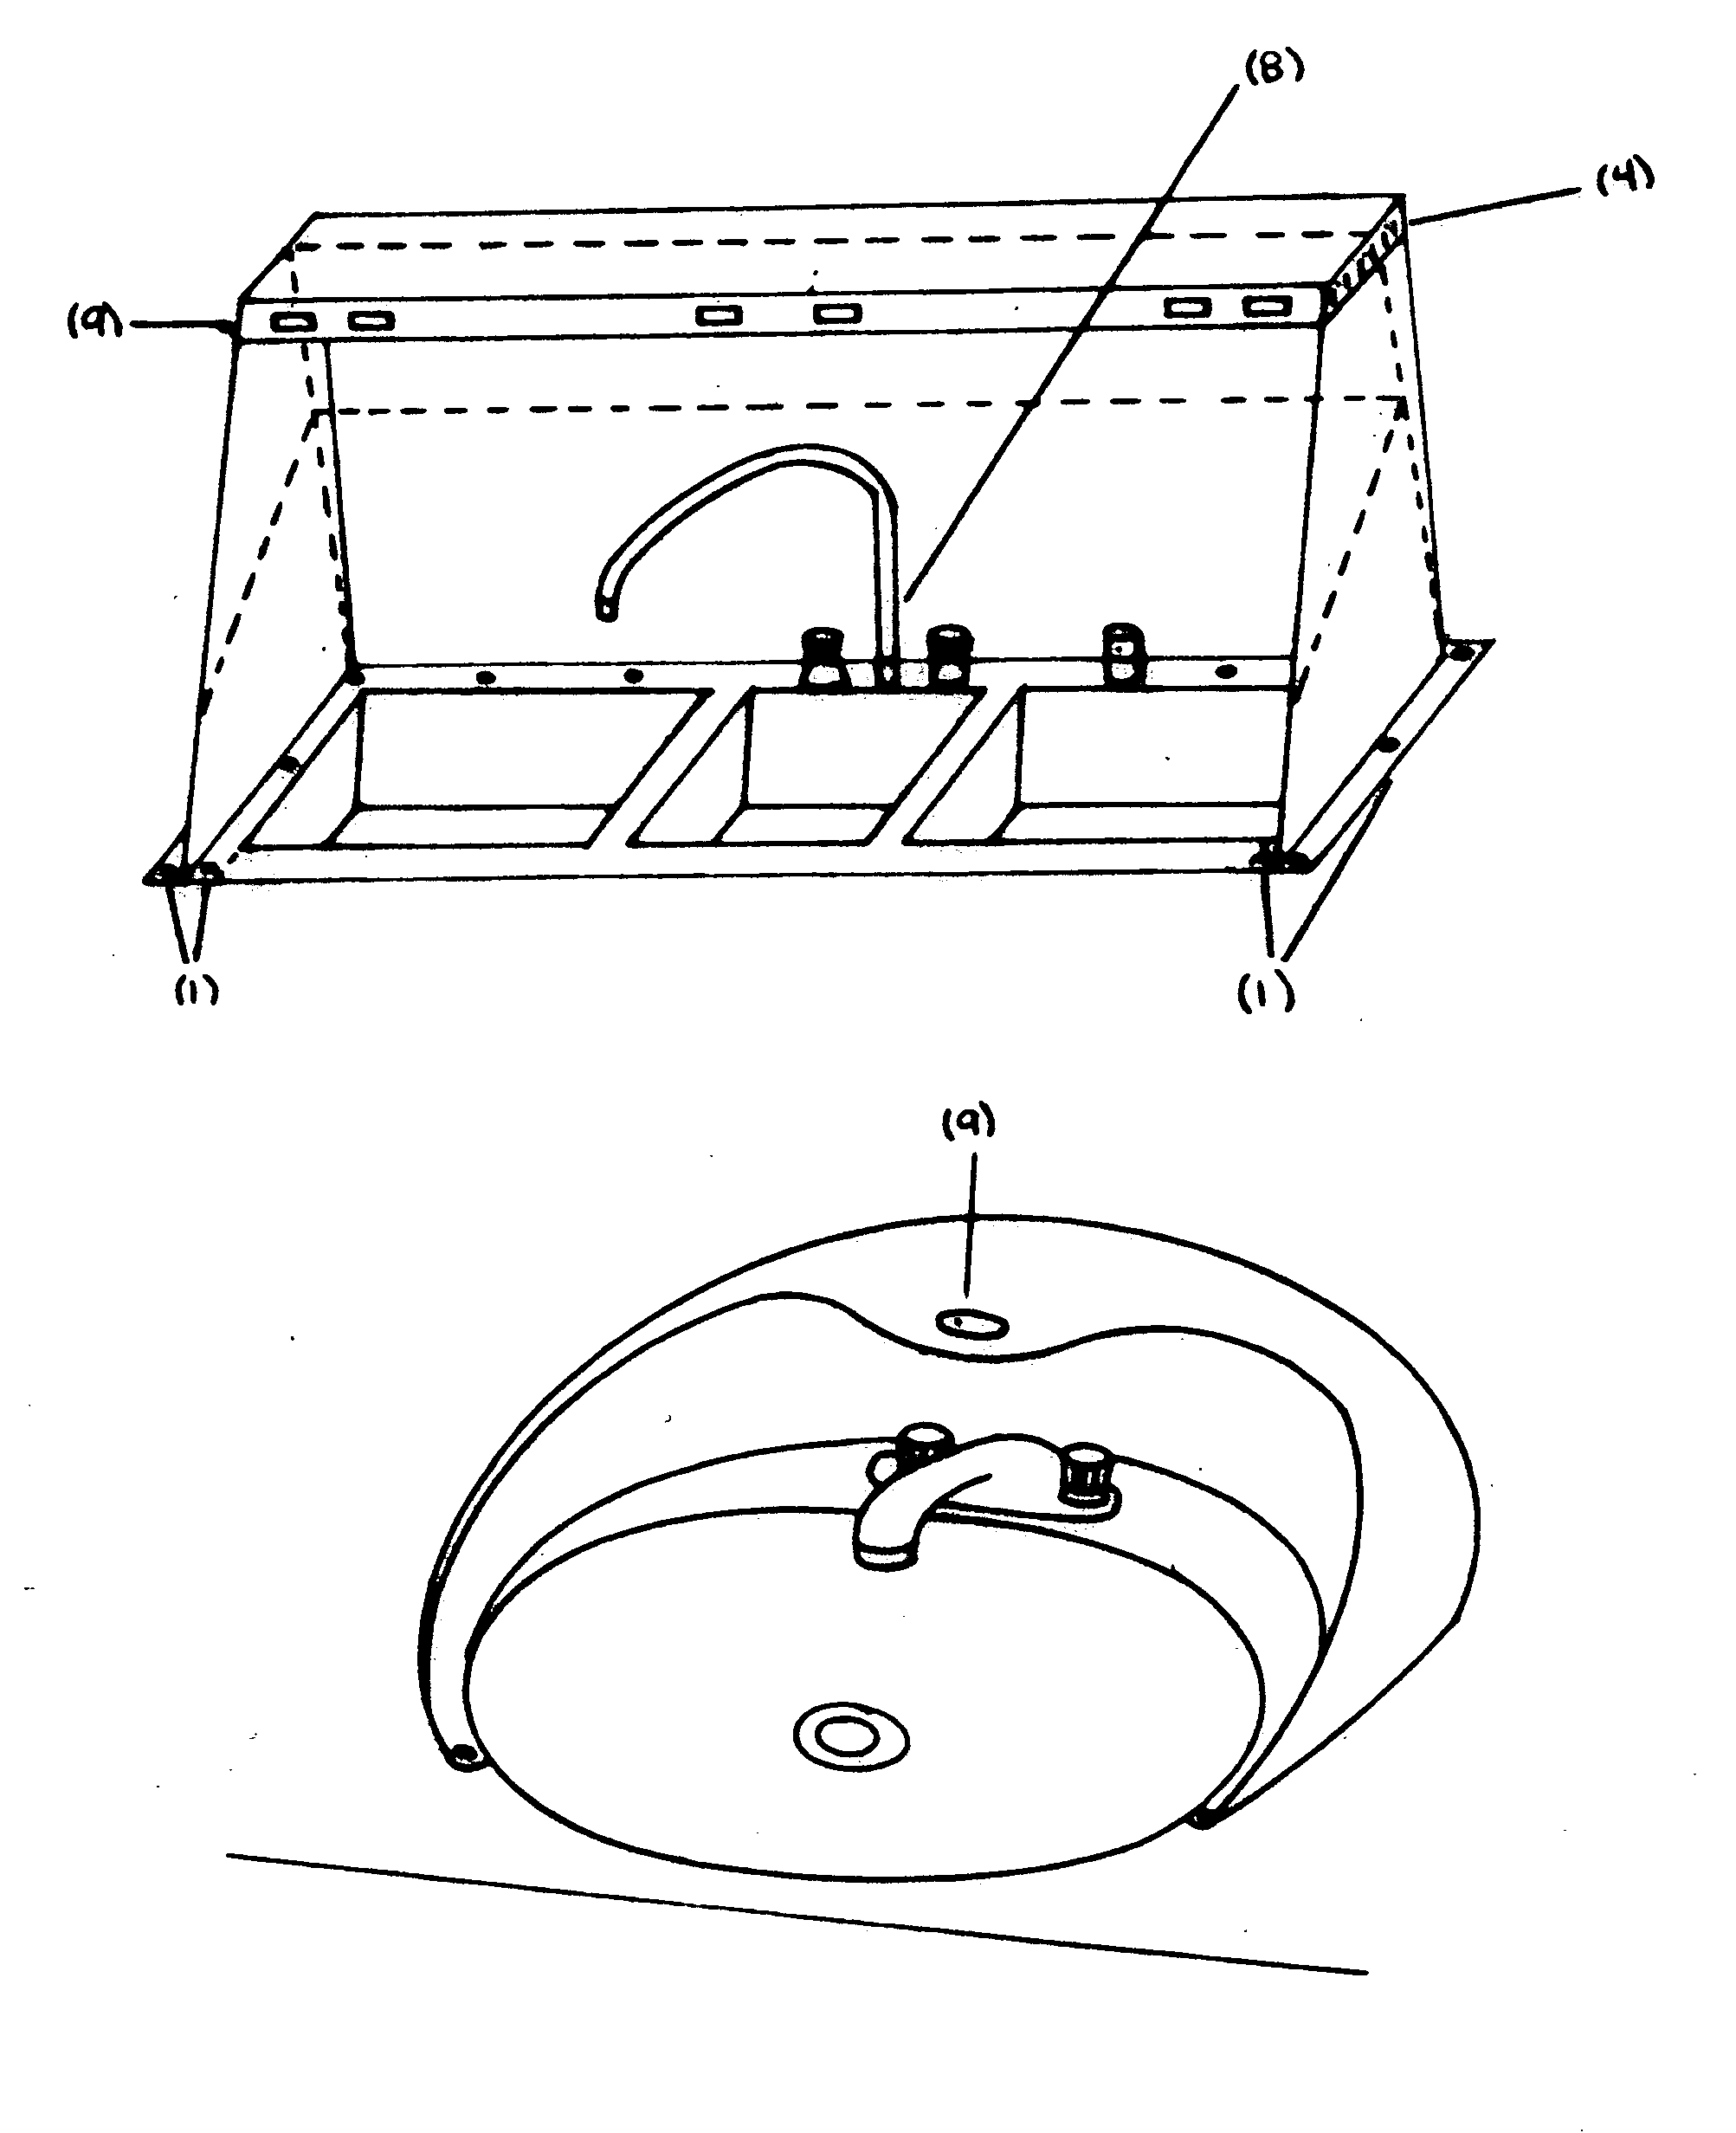 Sink and lavatory shell